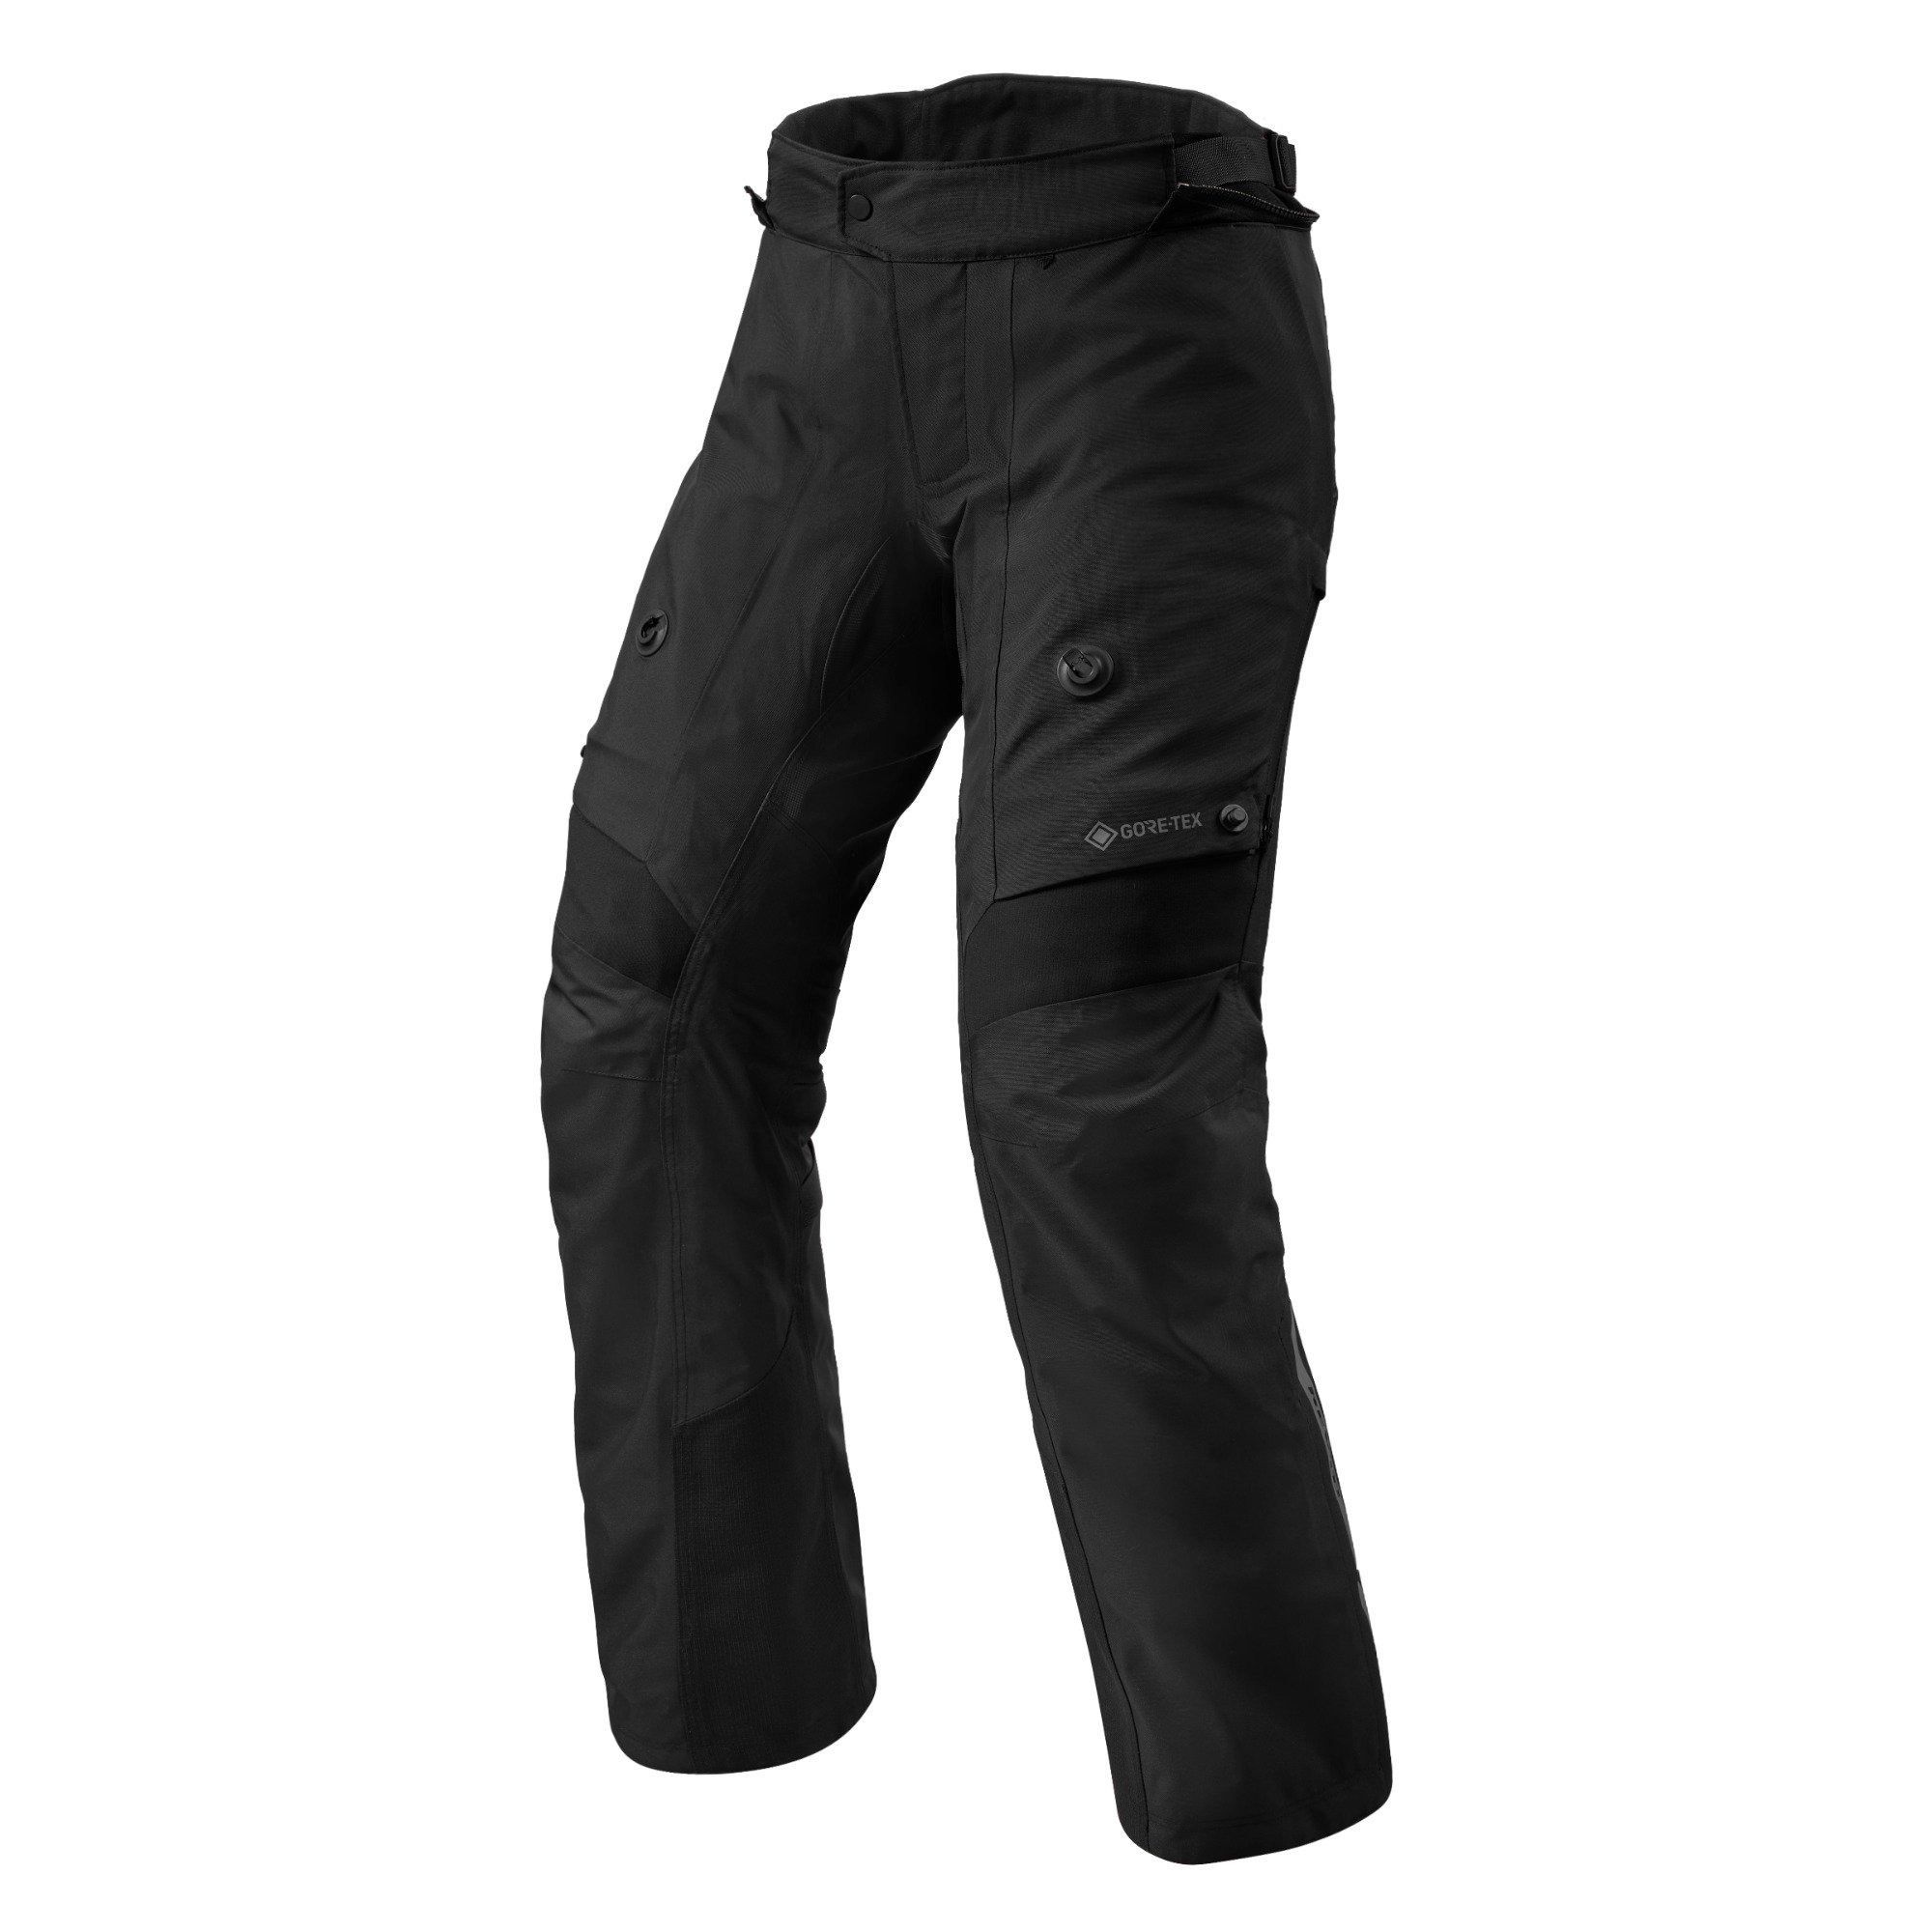 Image of REV'IT! Pants Poseidon 3 GTX Black Standard Motorcycle Pants Size 4XL EN